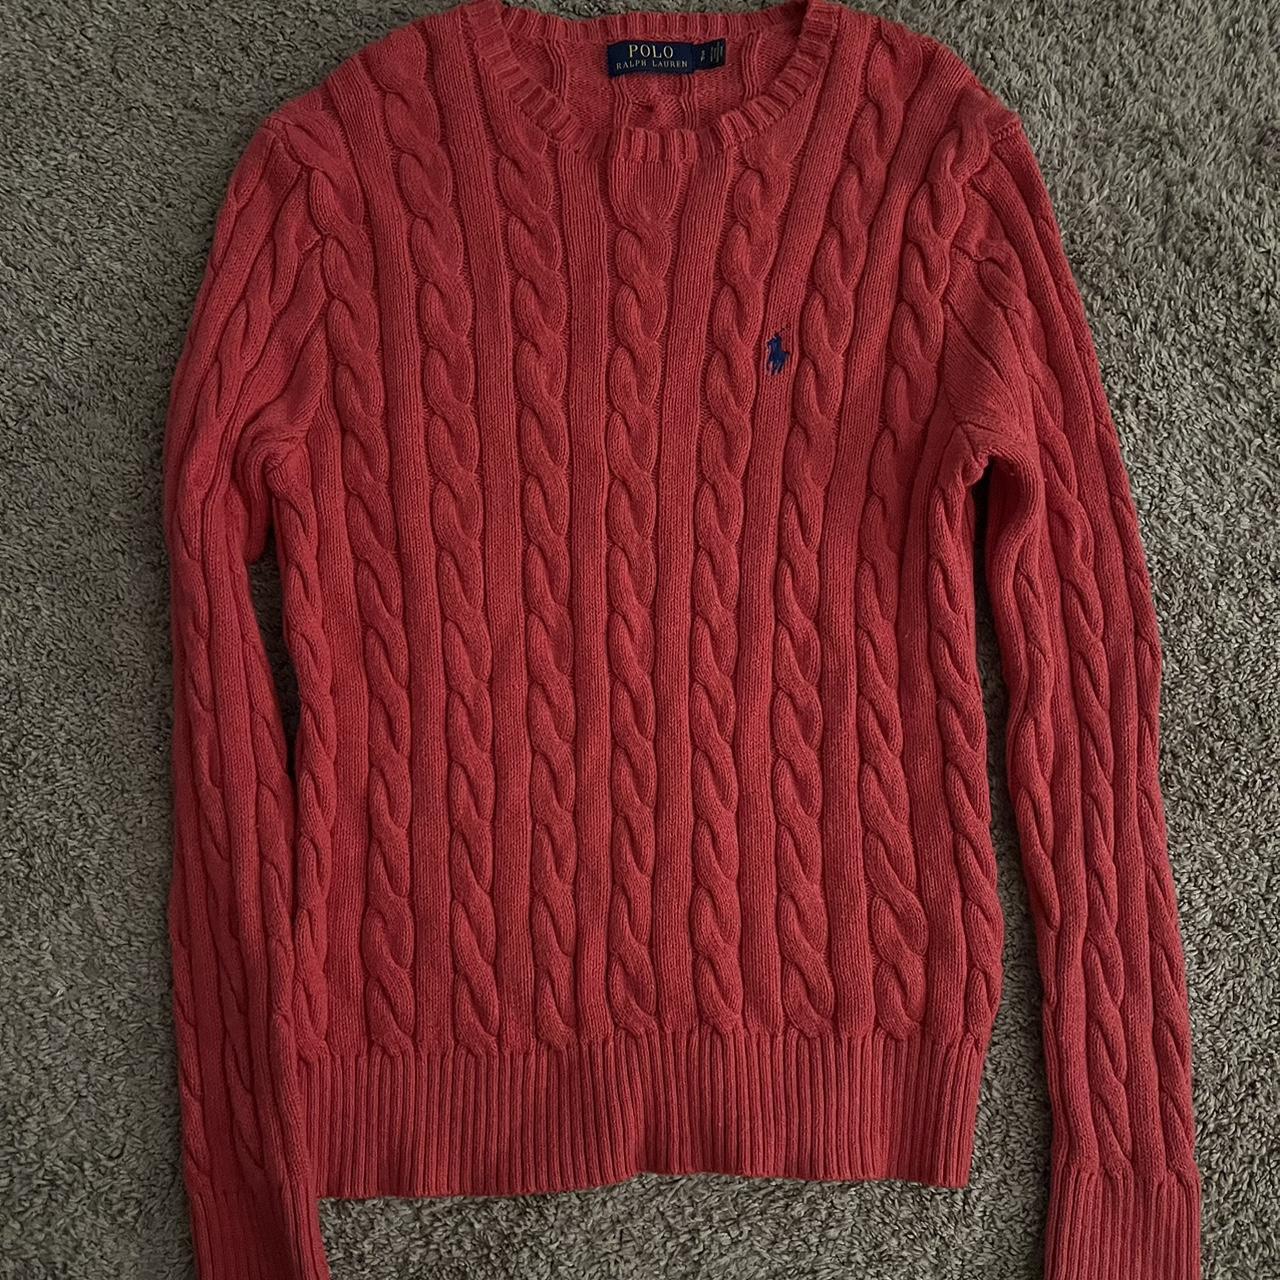 Ralph Lauren Red Cable Knit Sweater - Depop